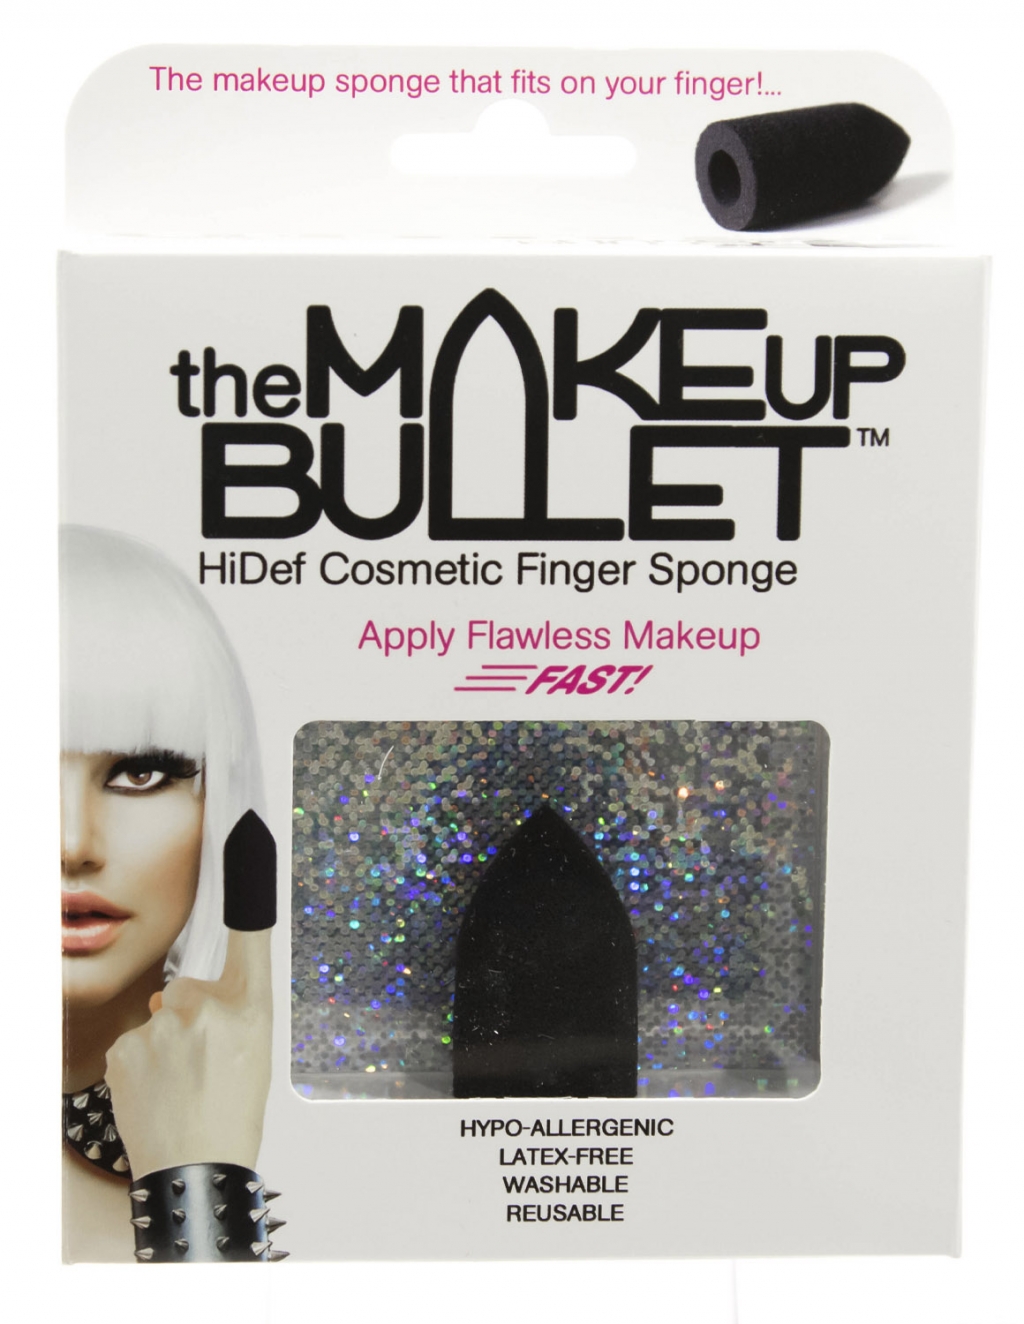 The Makeup Bullet Косметический спонж, 1 шт (The Makeup Bullet, Sponge)  - Купить